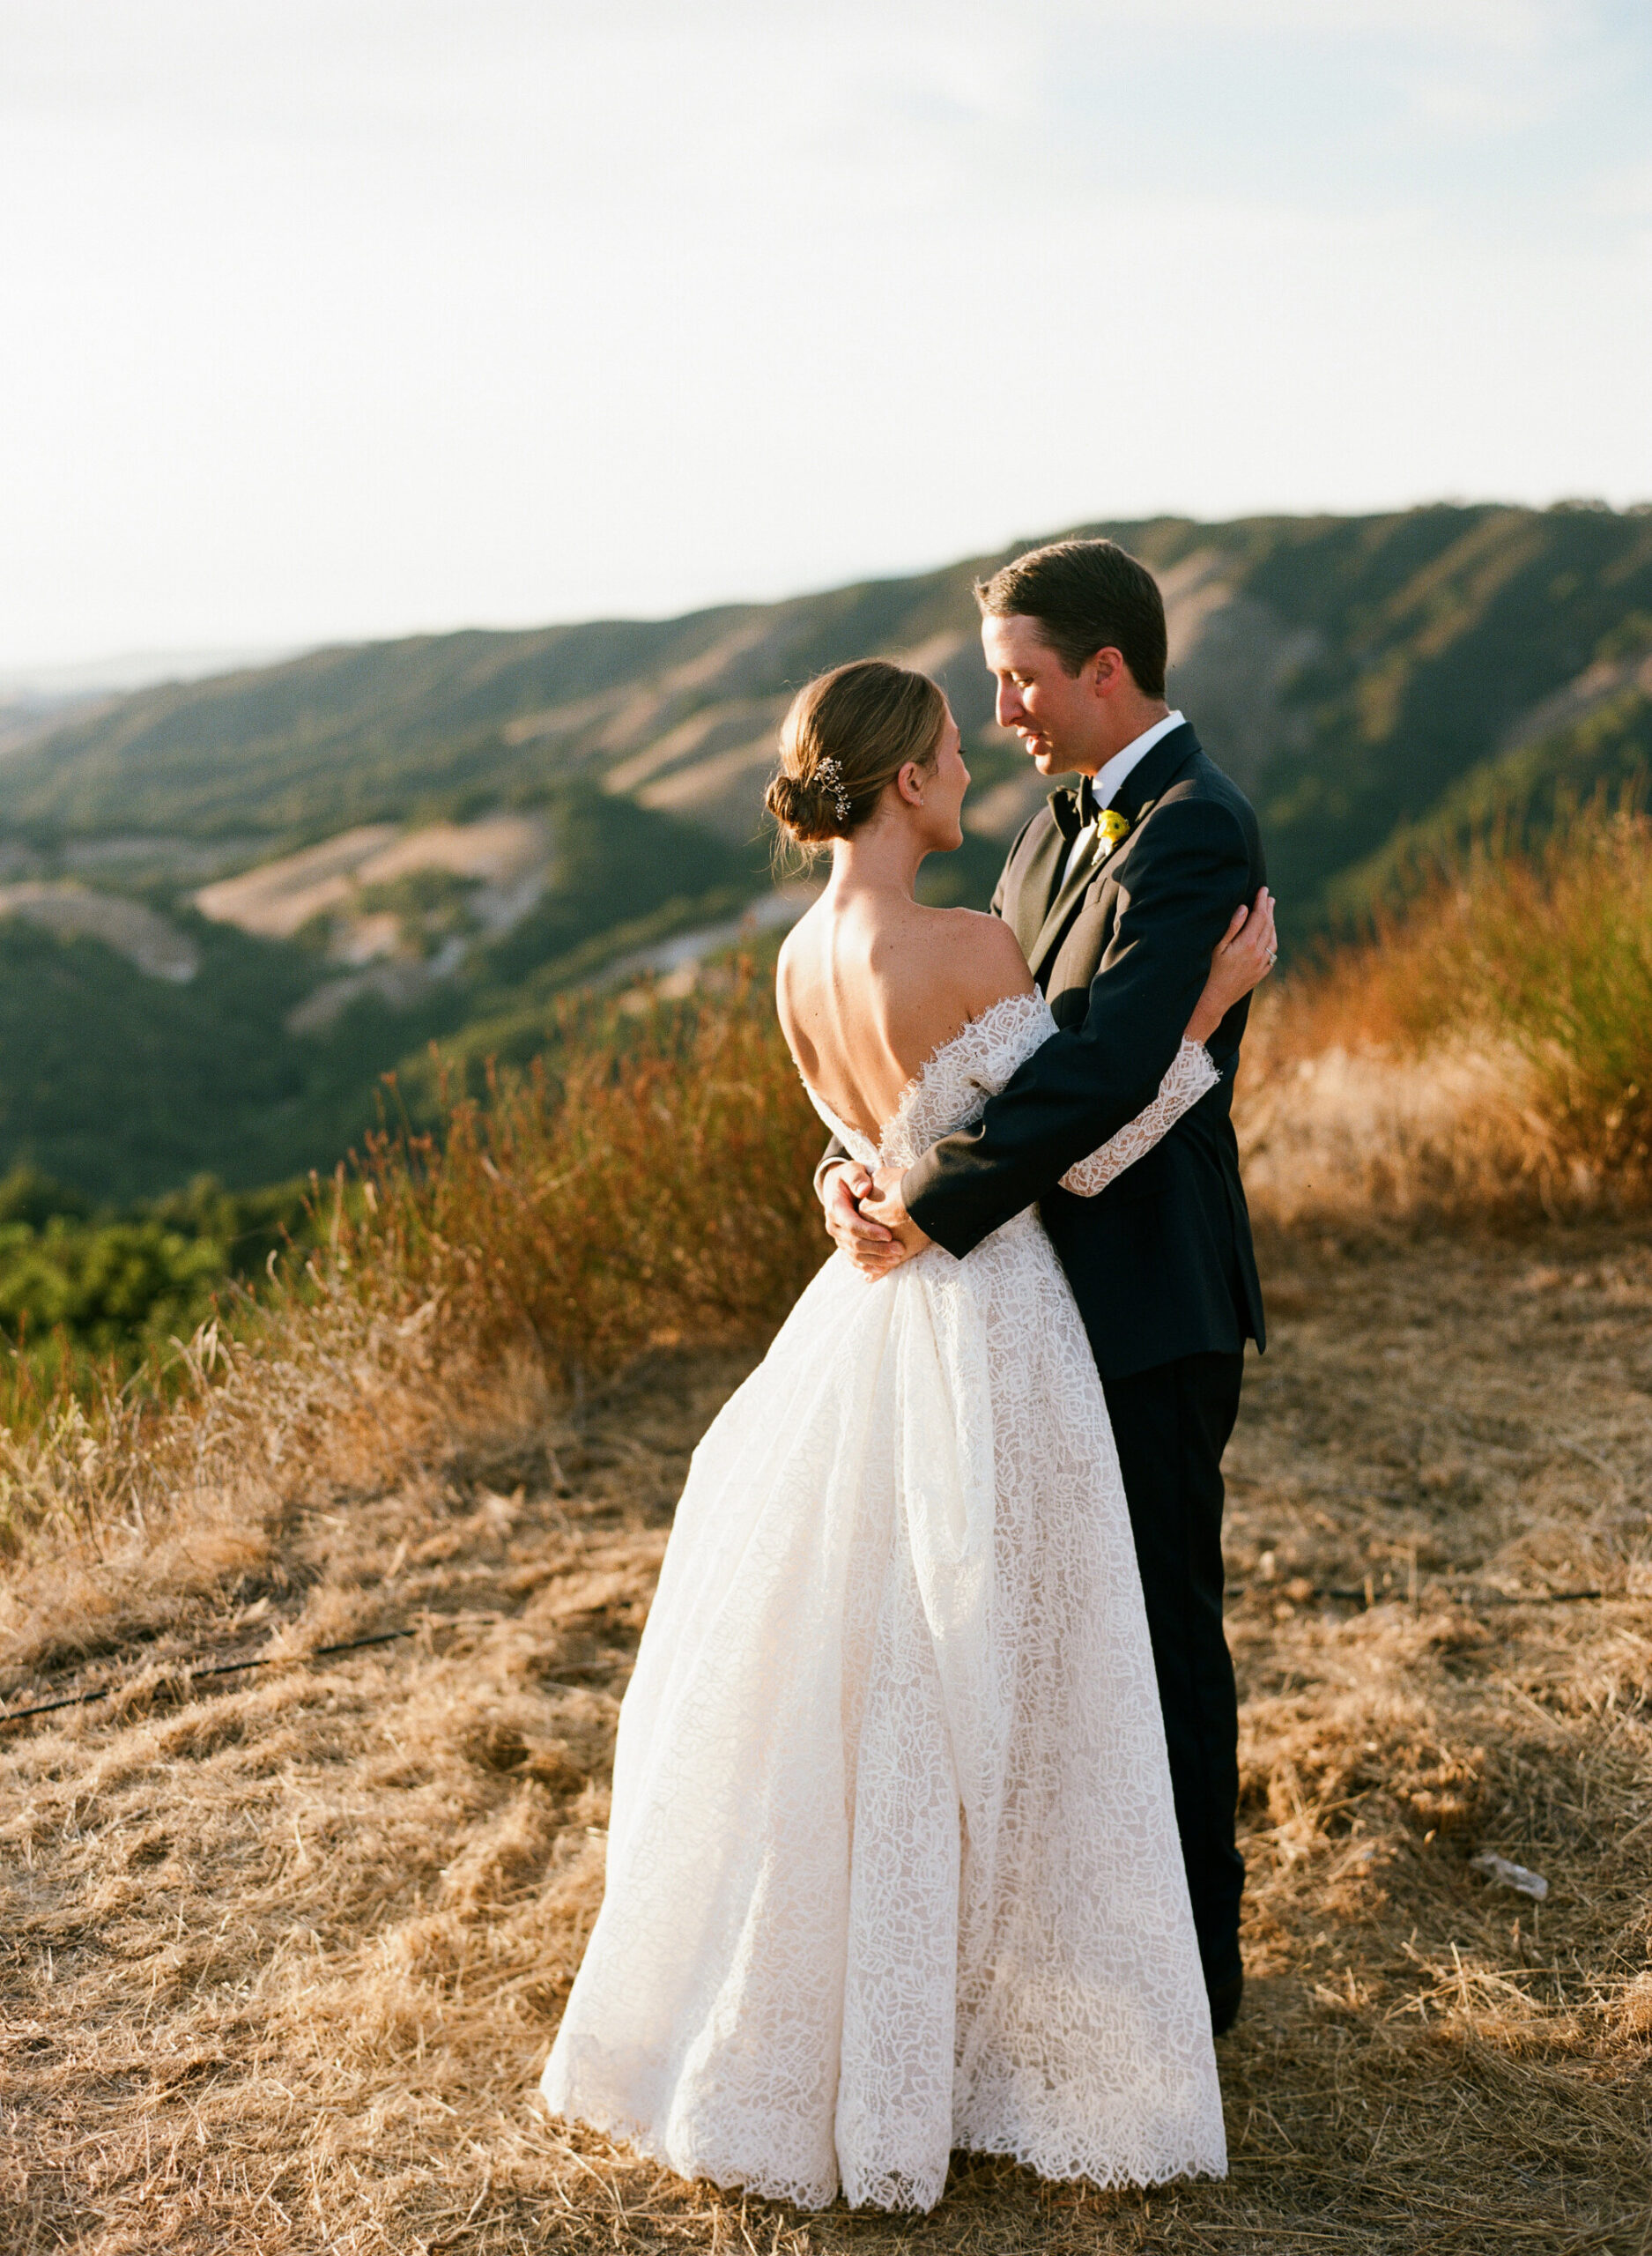 Carmel-Valley-Redwoods-Santa-Lucia-Preserve-Liz-Banfield-Photographer-California-sophisticated-outdoor-wedding 60.JPG